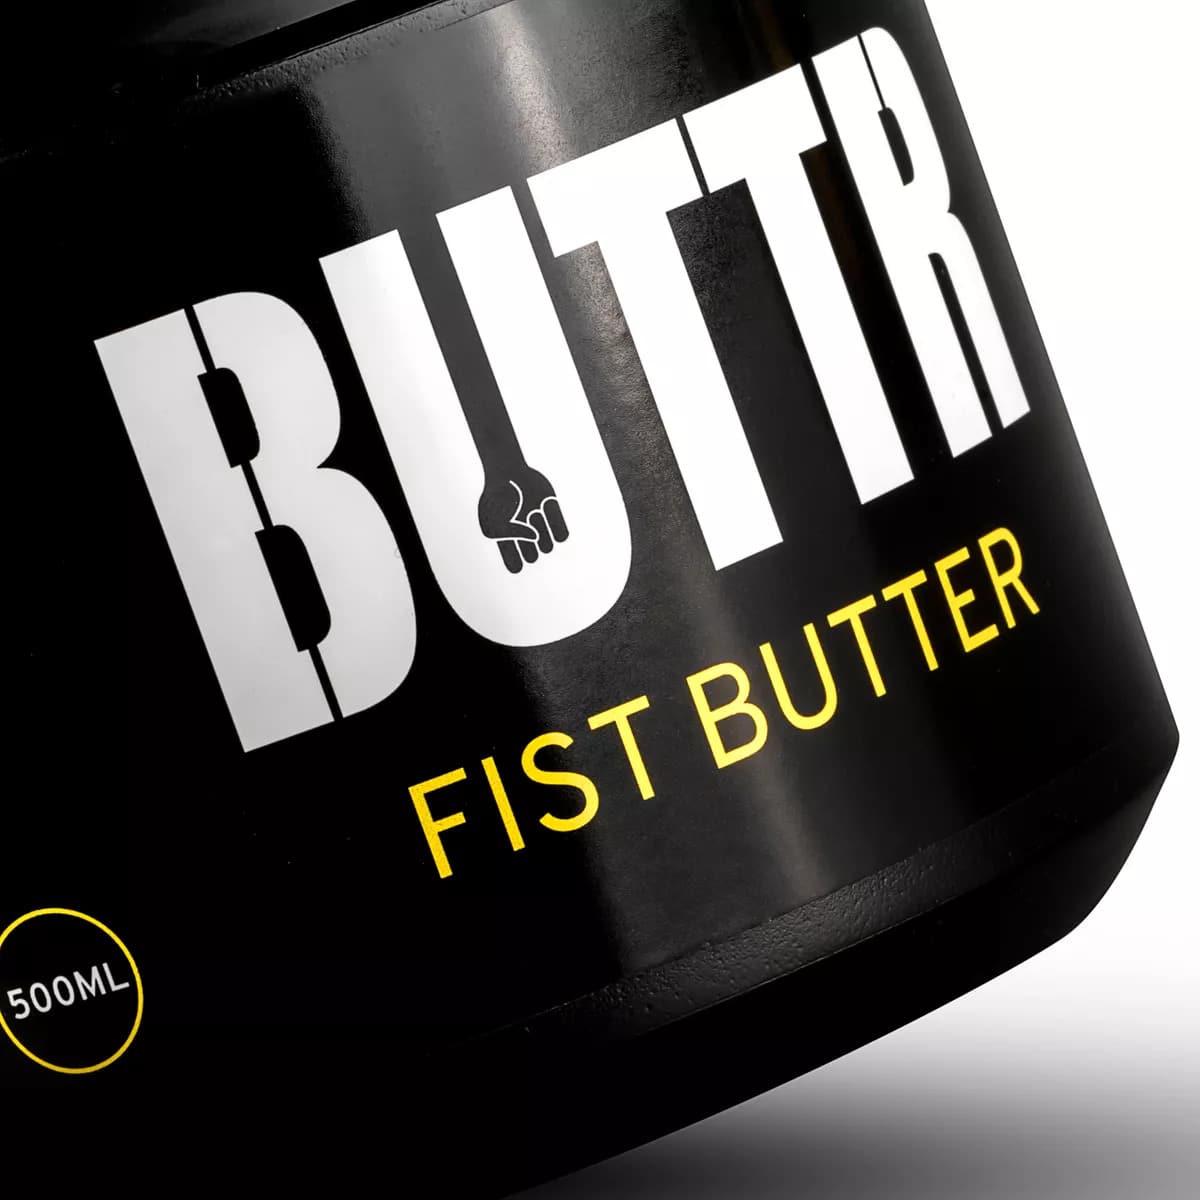 BUTTR Fisting Butter. Slide 3